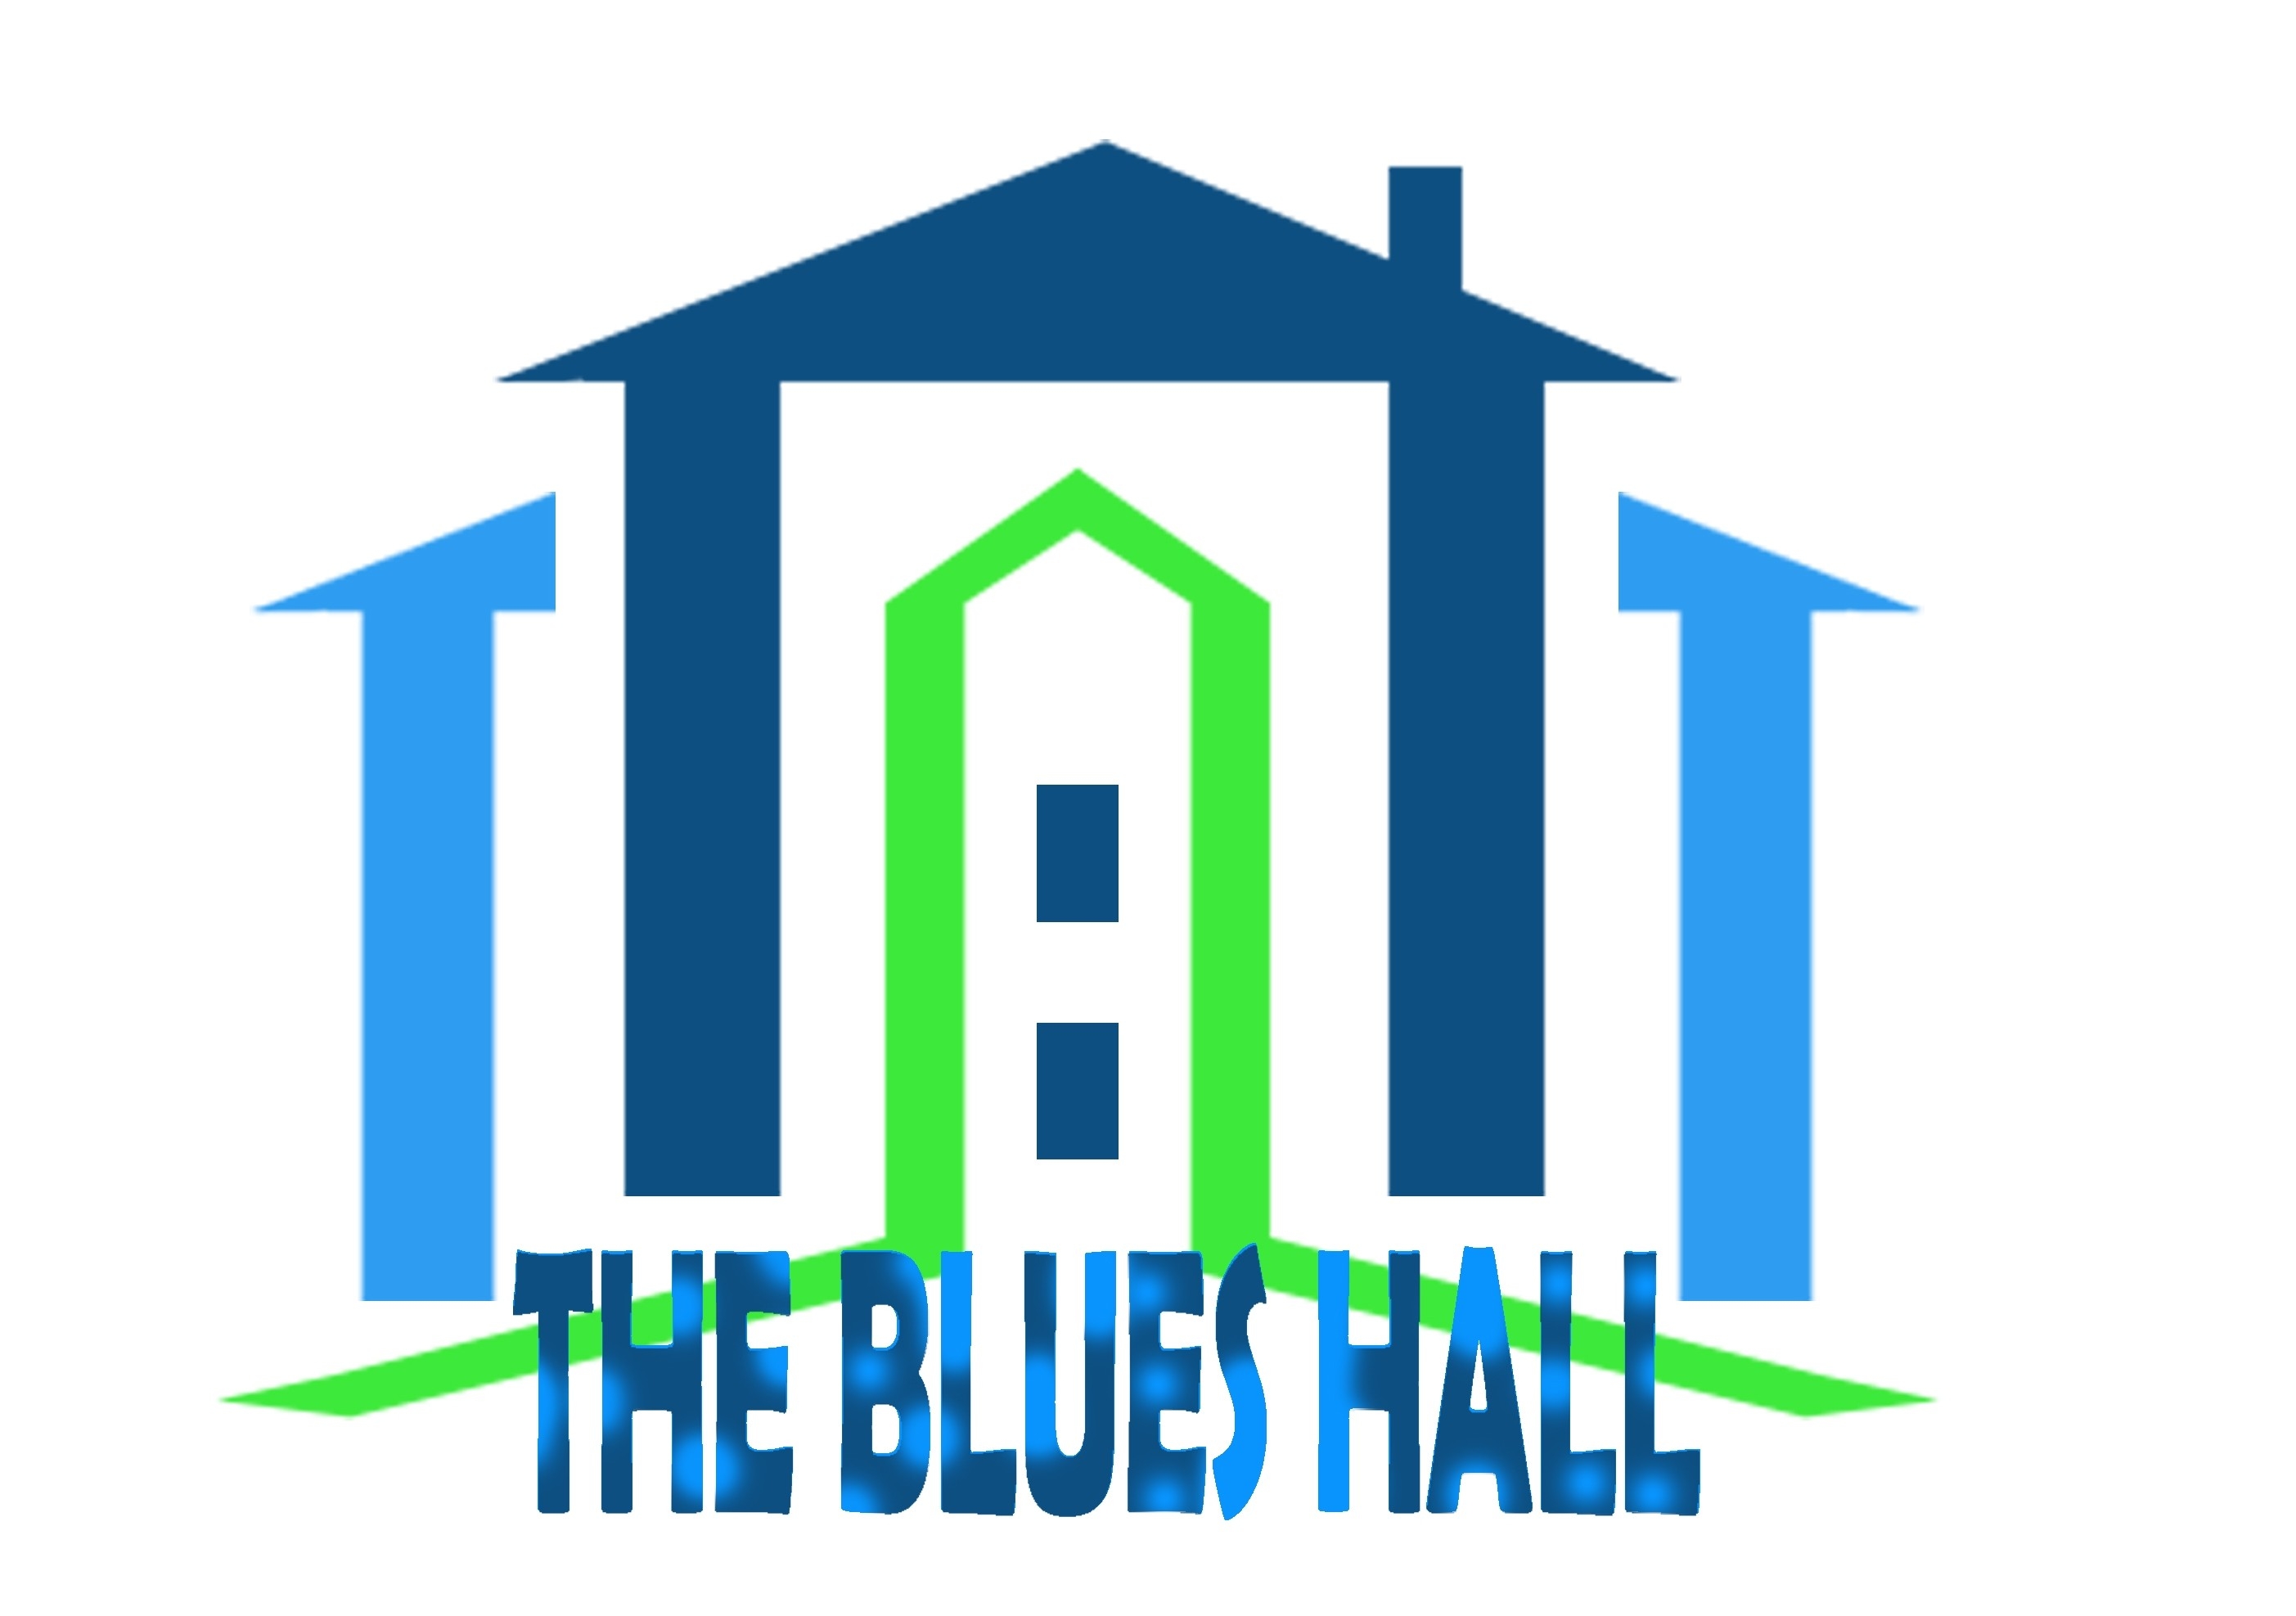 The Blues Stadium logo